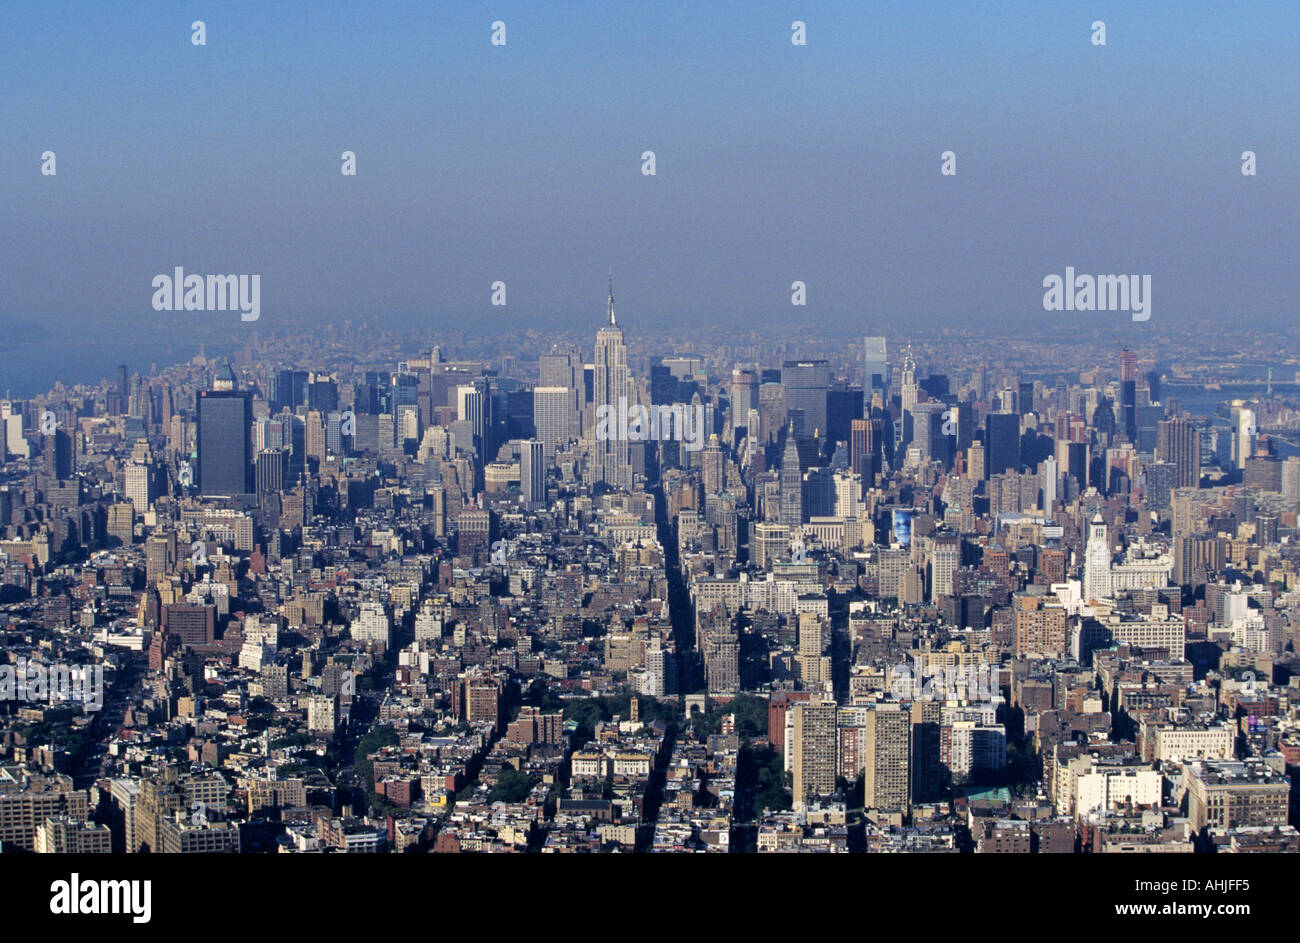 Skyline di Manhattan con Empire state, Chrysler e Met Life Buildings dal World Trade Center. New York, New York, Stati Uniti. Foto Stock